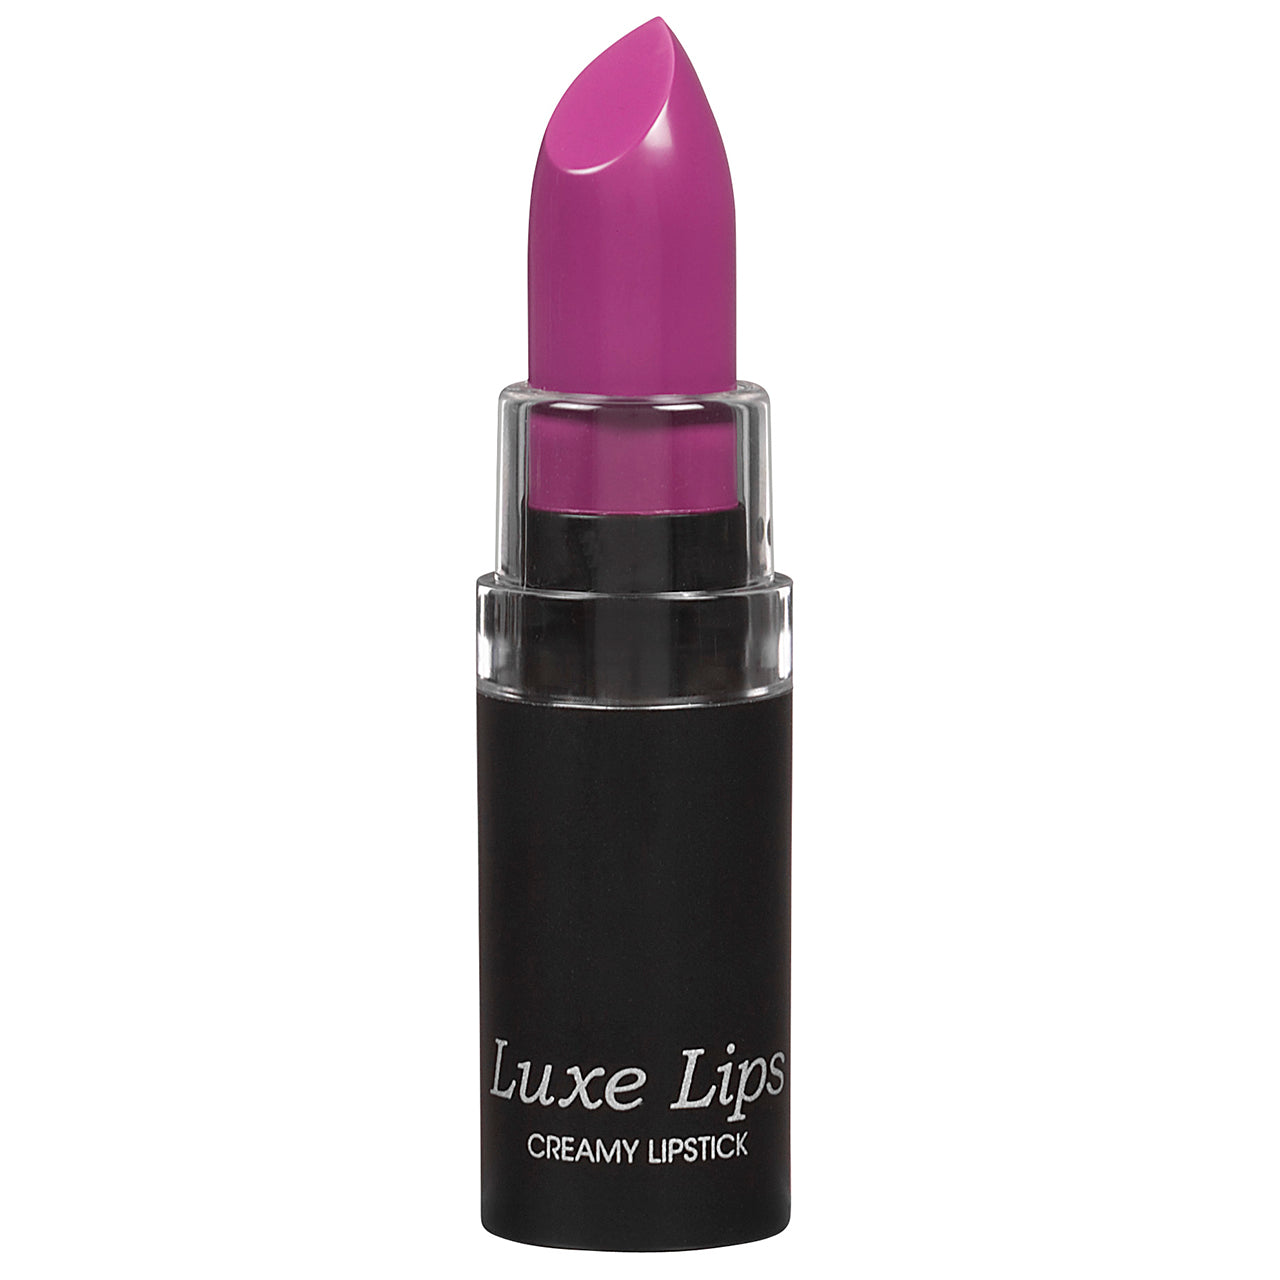 Styli-Style Luxe Lips Creamy Lipstick - It Girl - ADDROS.COM